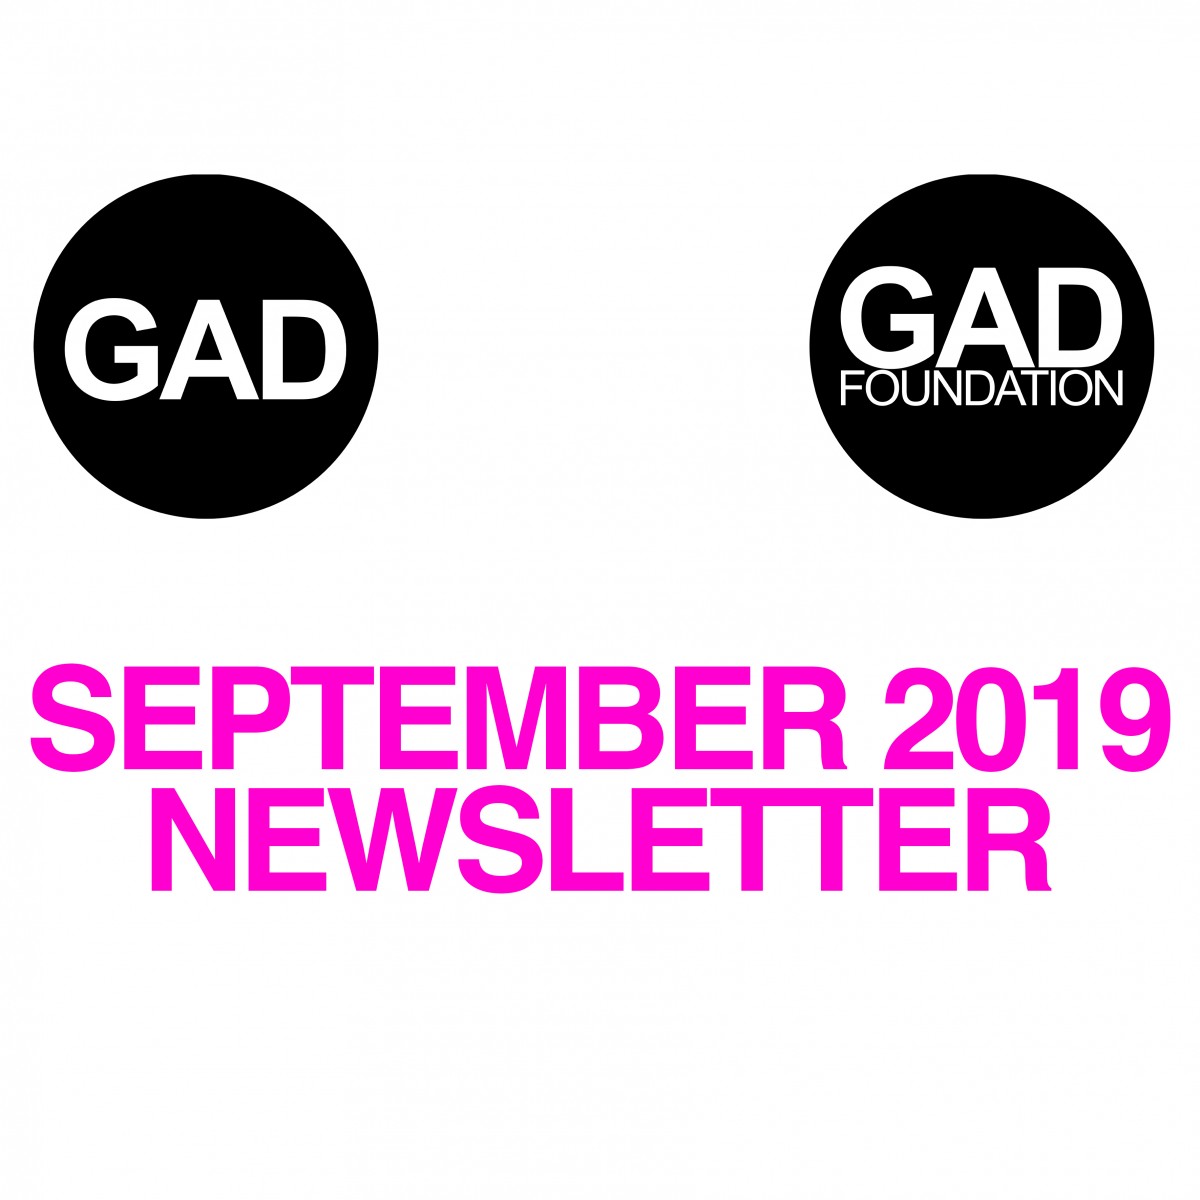 Eylül 2019 Newsletter